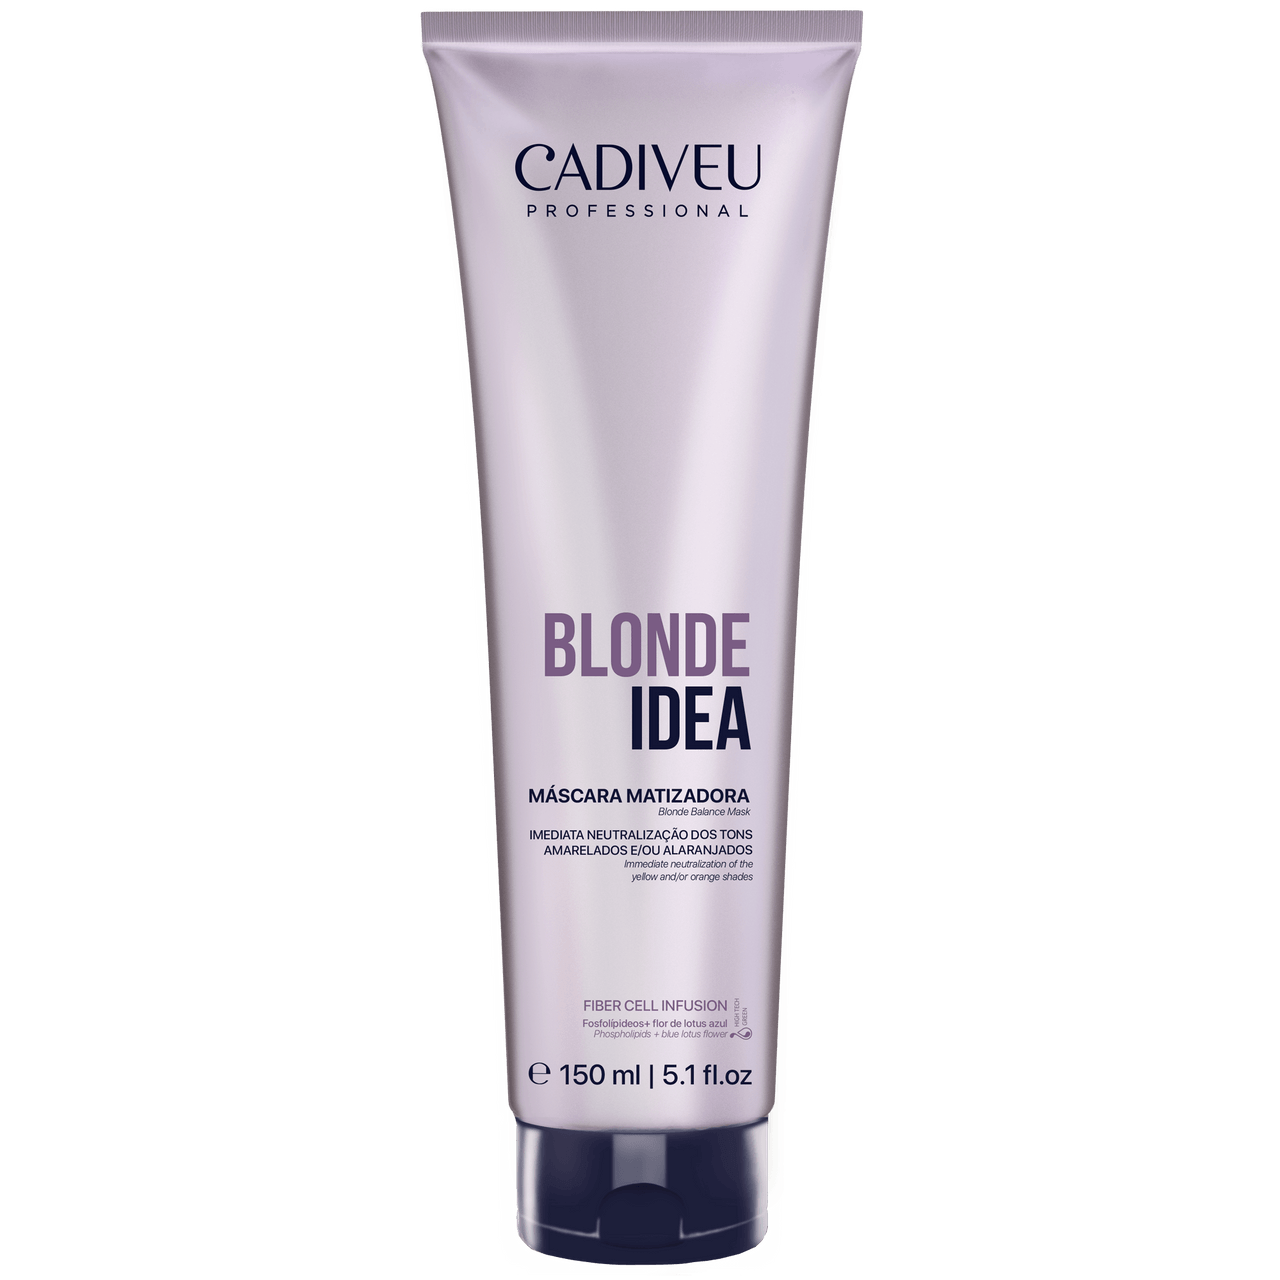 CADIVEU - Blonde Idea Blonde Balance, Mask 150g